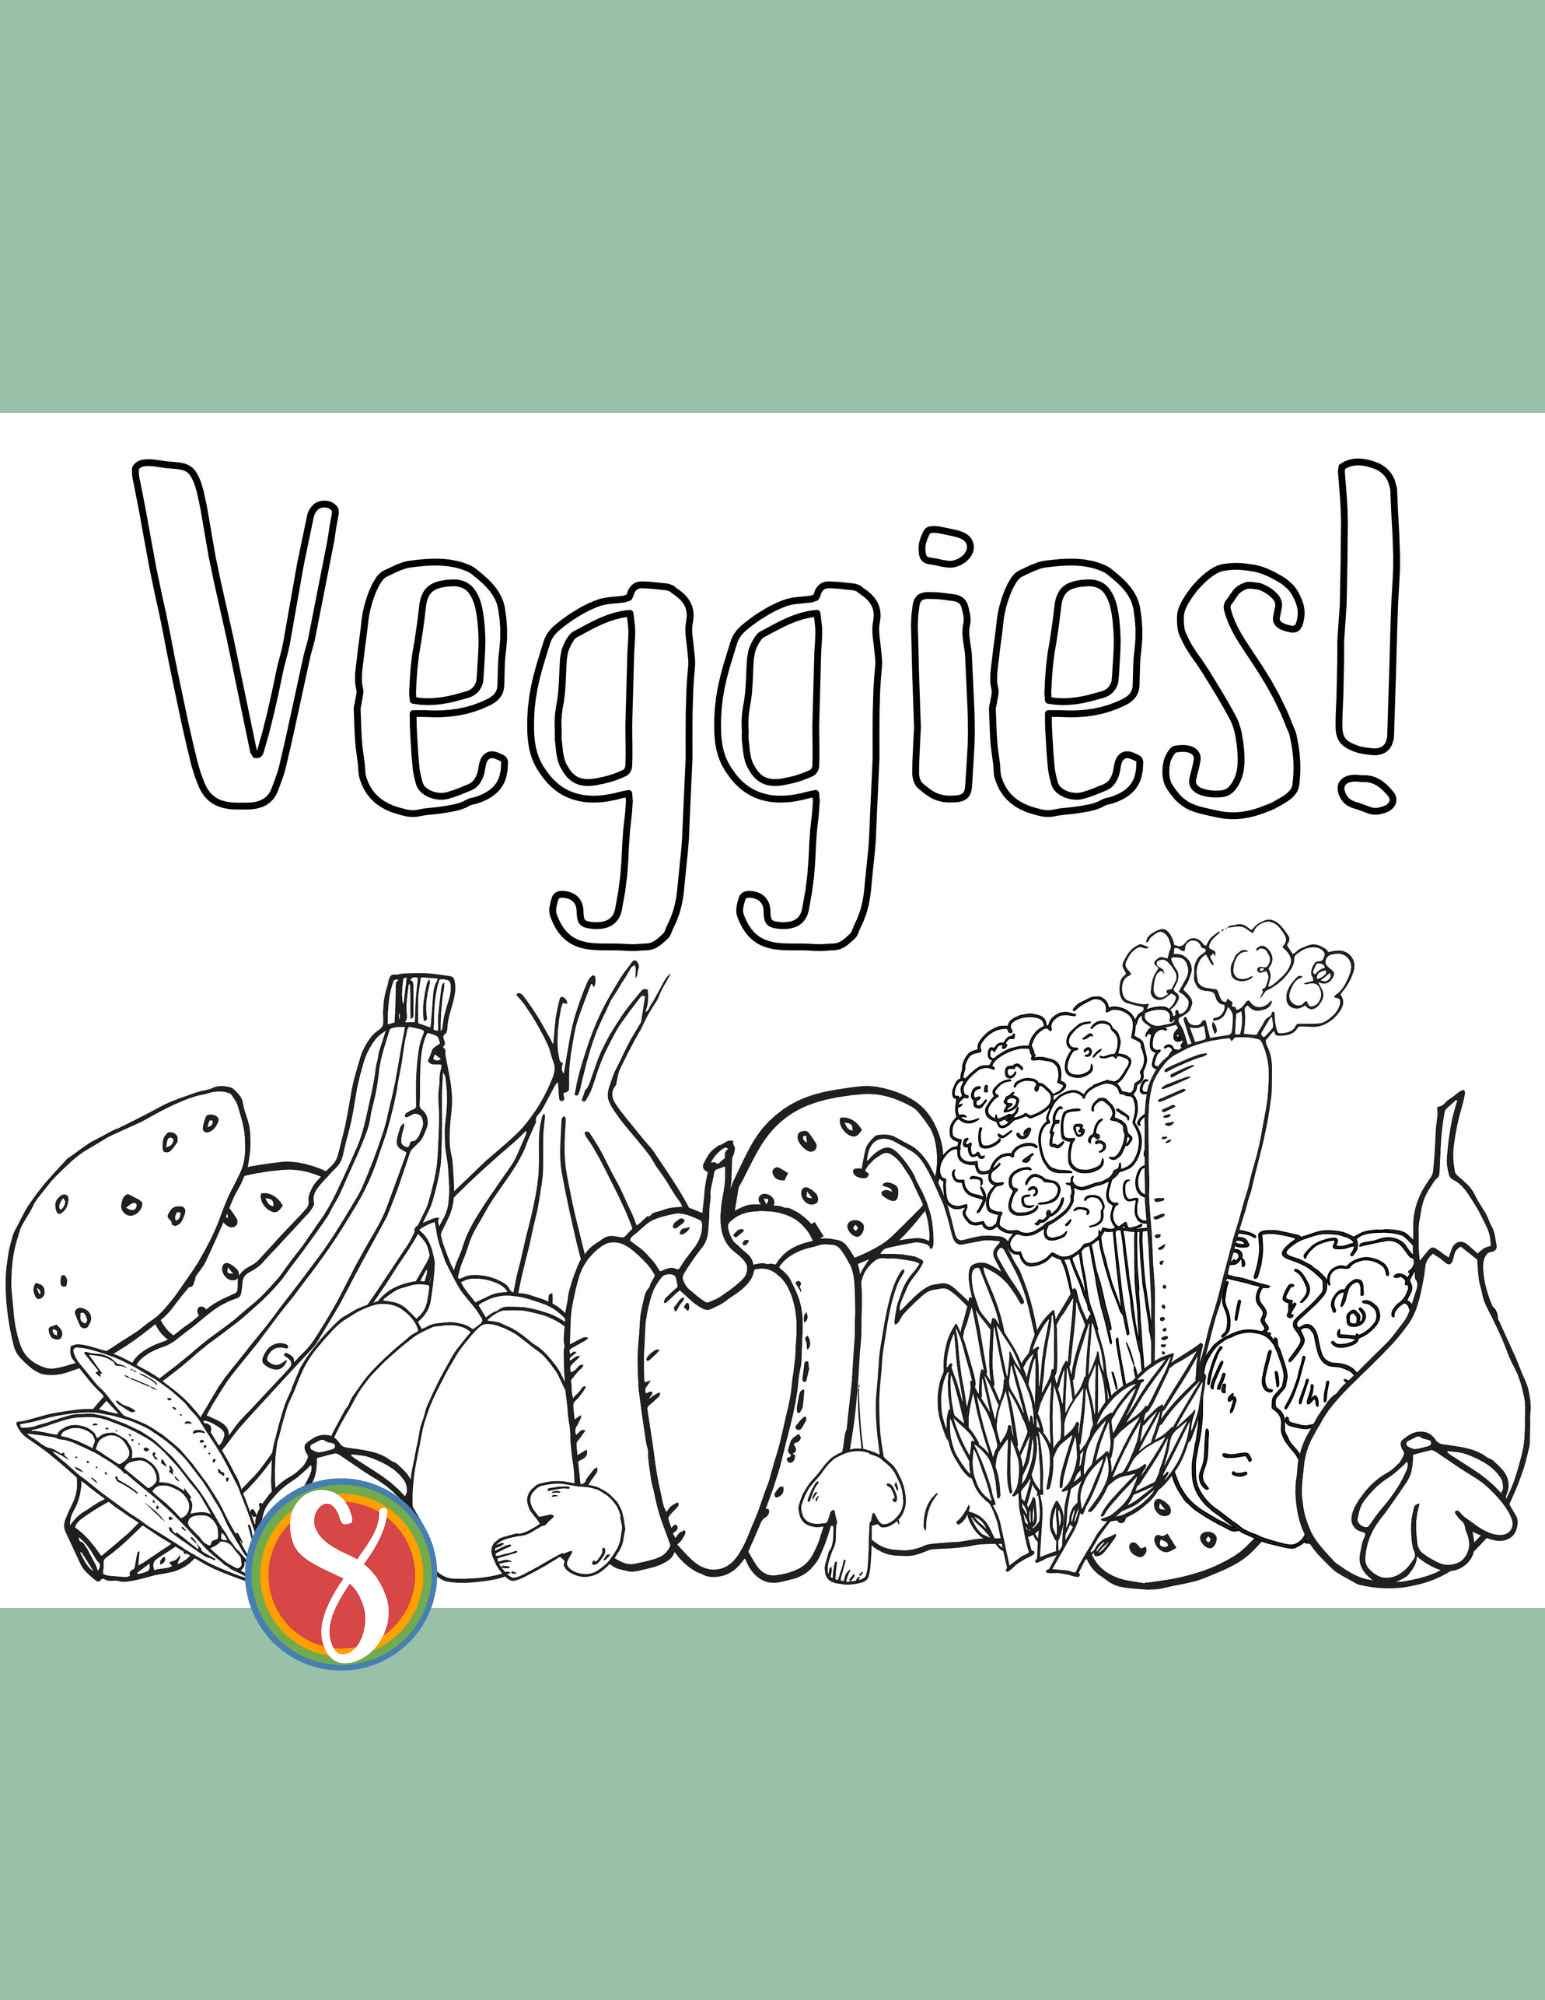 Free vegetables coloring pages â stevie doodles